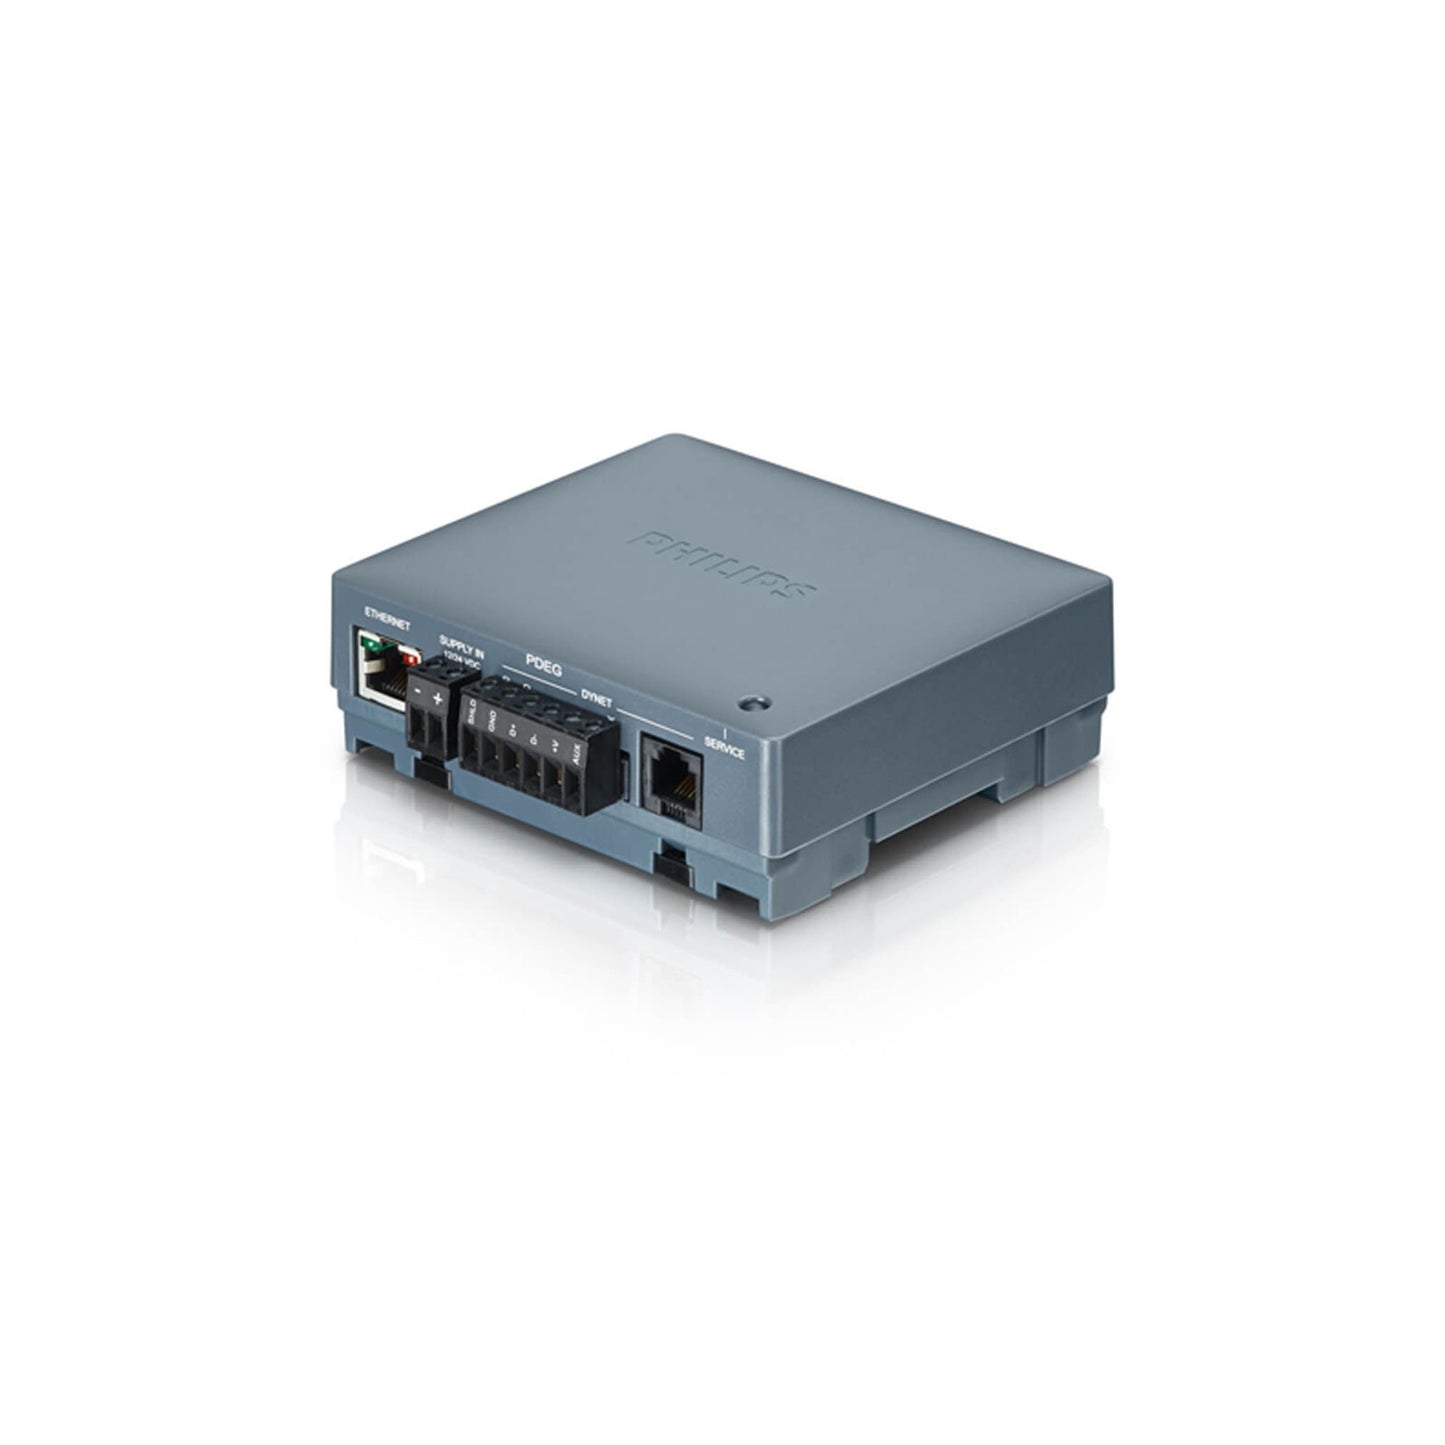 Philips Dynalite PDEG – Ethernet Gateway - Trimira